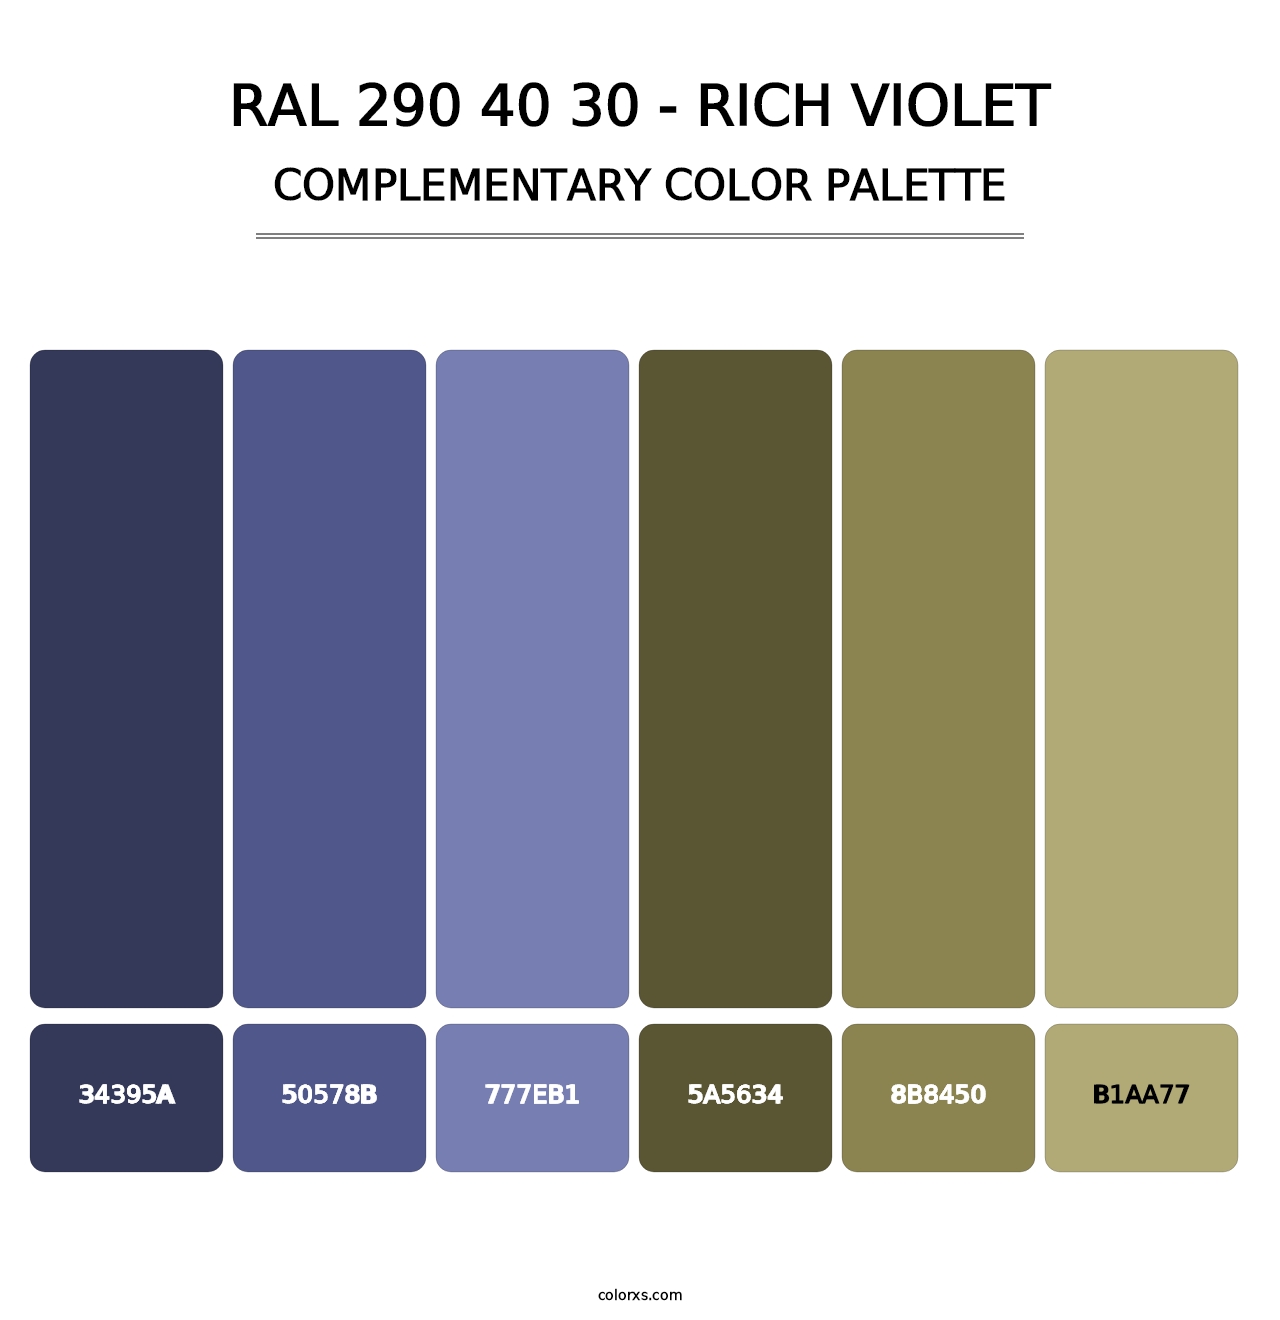 RAL 290 40 30 - Rich Violet - Complementary Color Palette